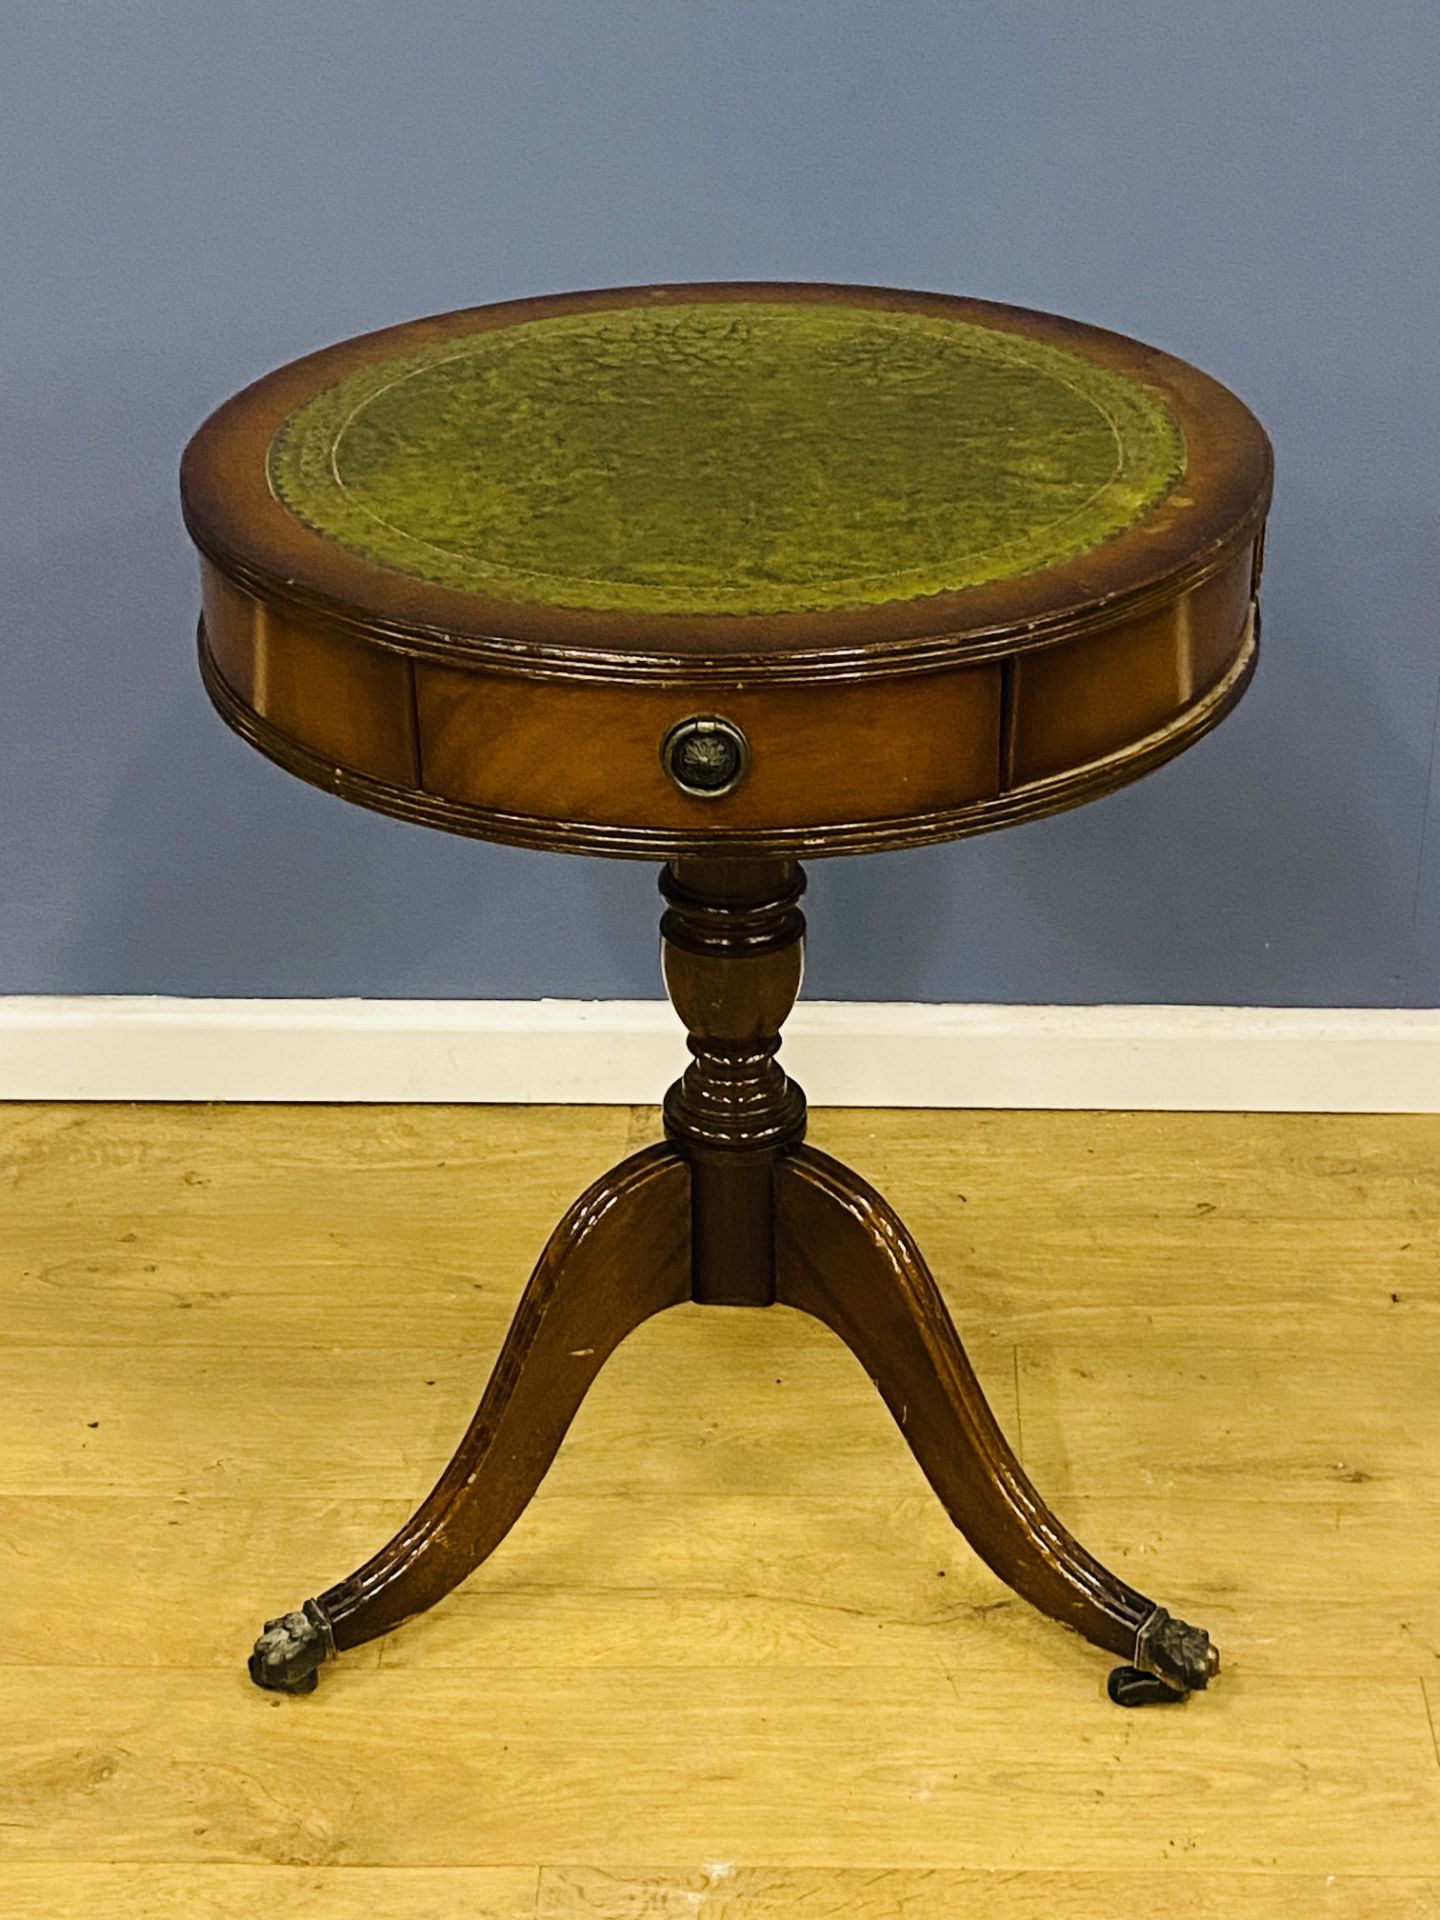 Circular drum table - Image 5 of 5